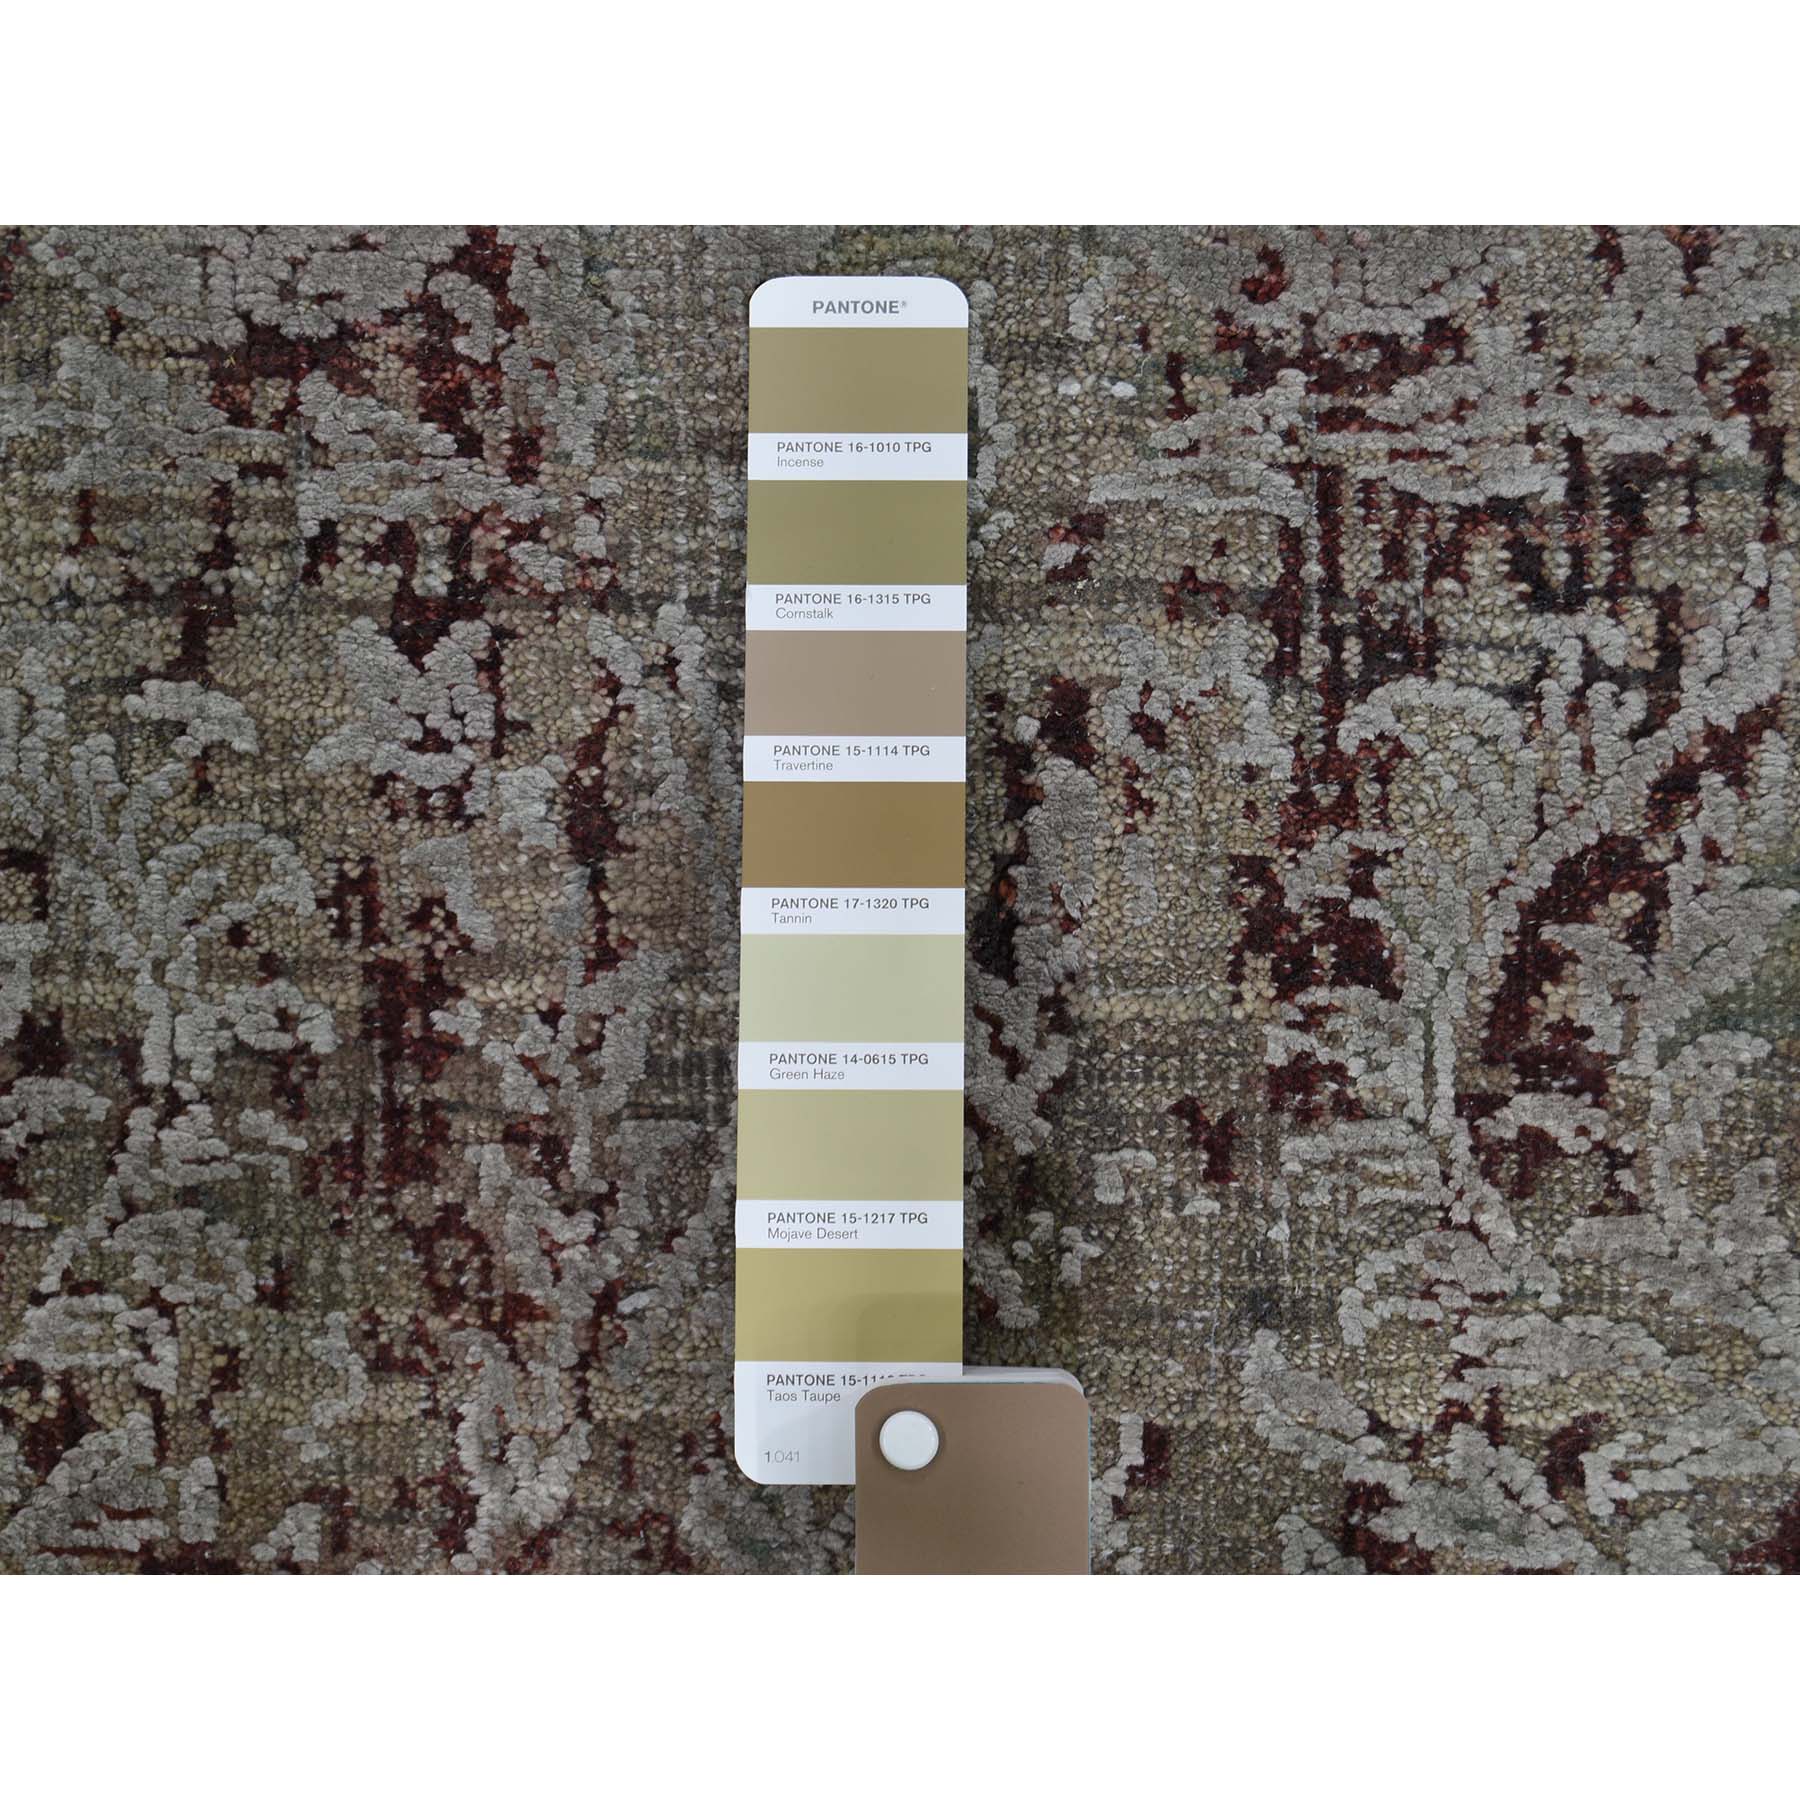 2-6 x8-1  Broken Tulip Design Silk With Oxidized Wool Runner Hand-Knotted Oriental Rug 